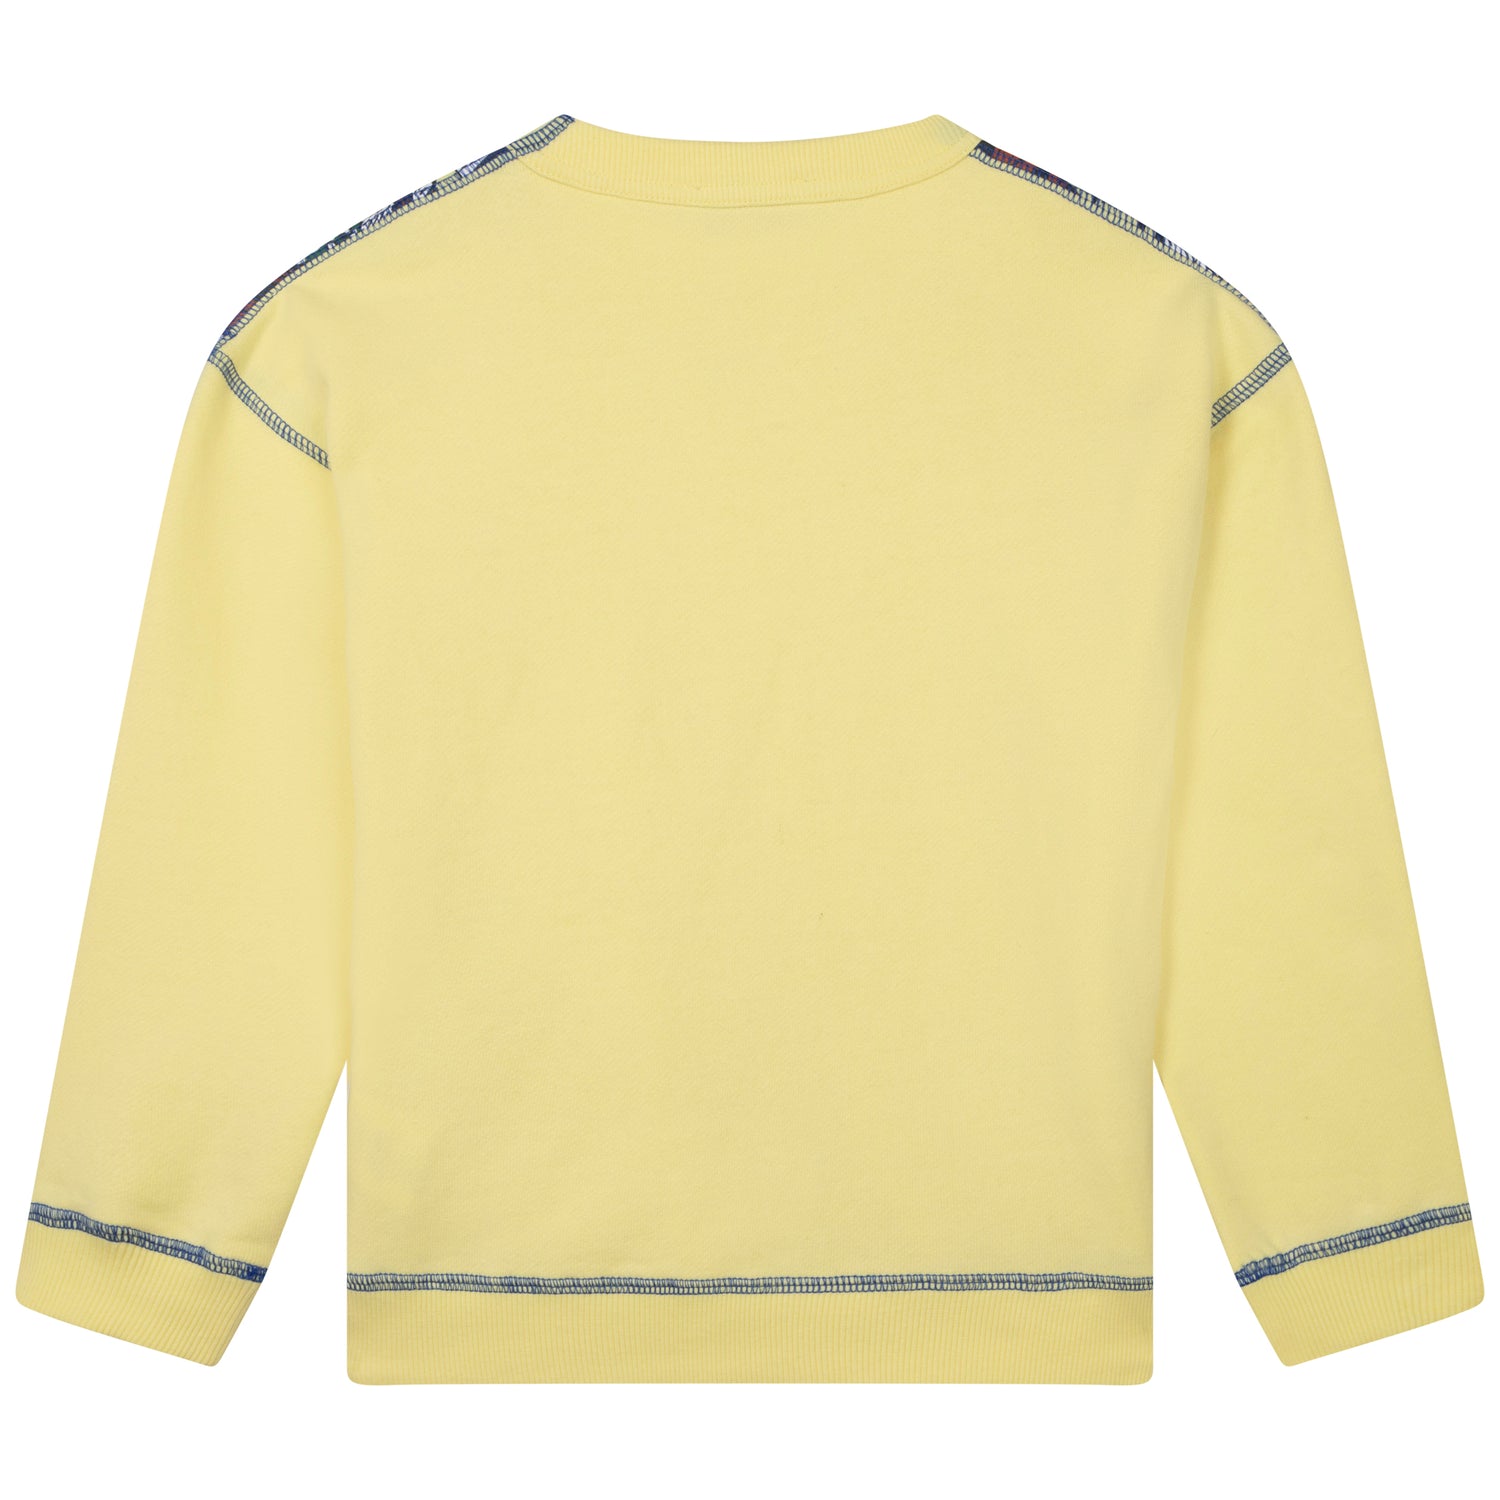 The Marc Jacobs Sweatshirt Style: W25567